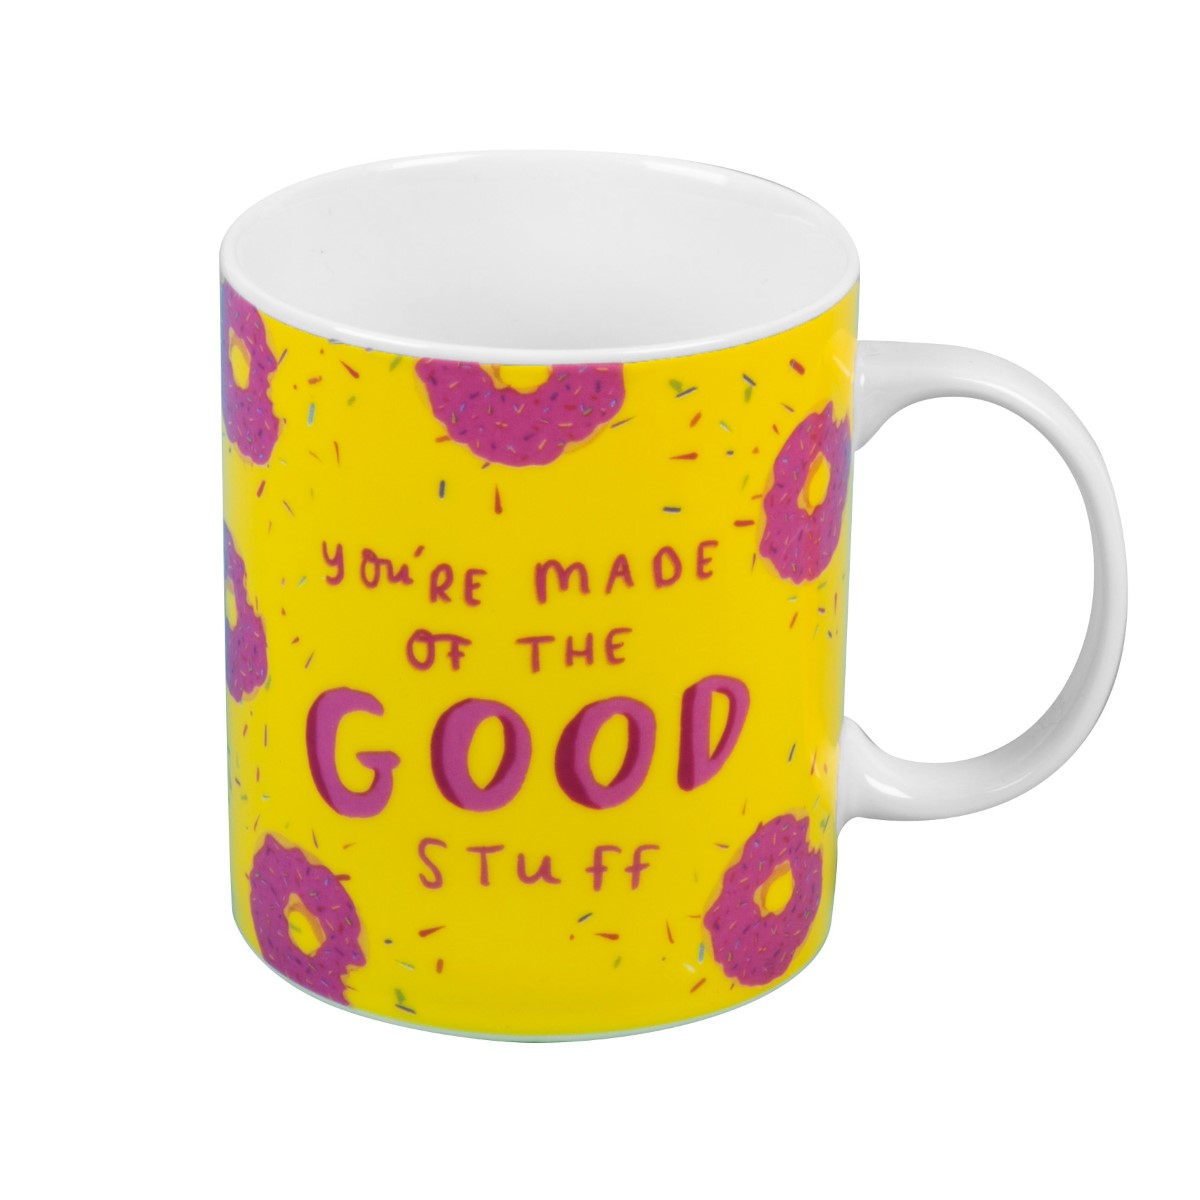 The Happy News You're Made of the Good Stuff Mug 400ml